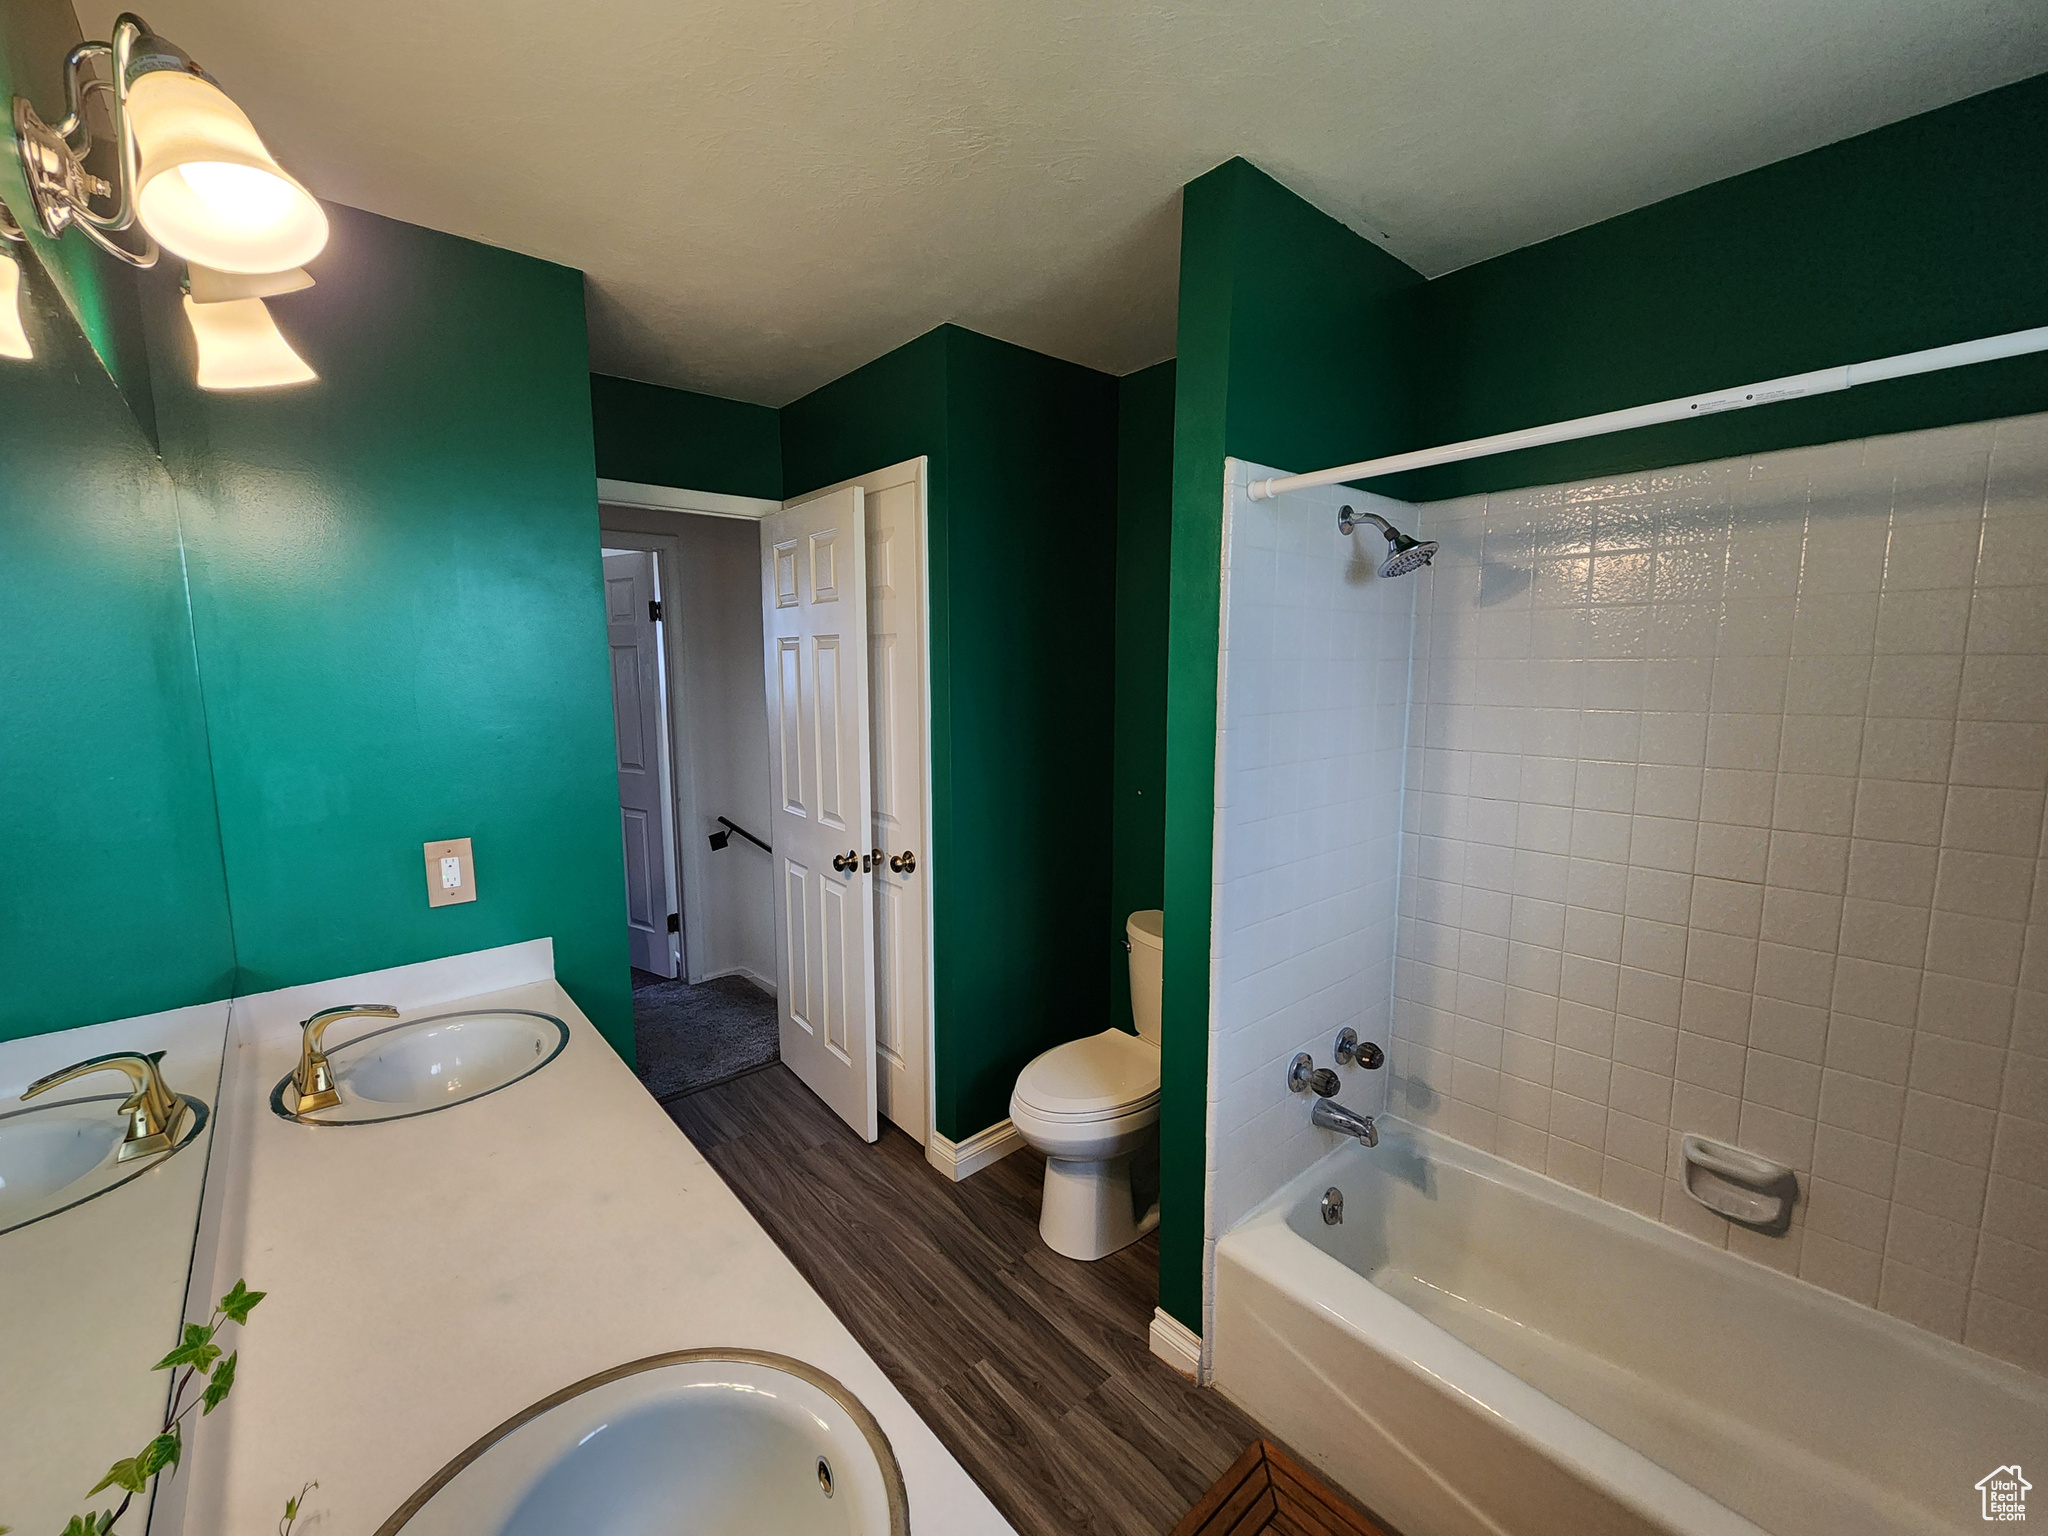 Full bathroom featuring wood-type flooring, vanity, toilet, and tiled shower / bath